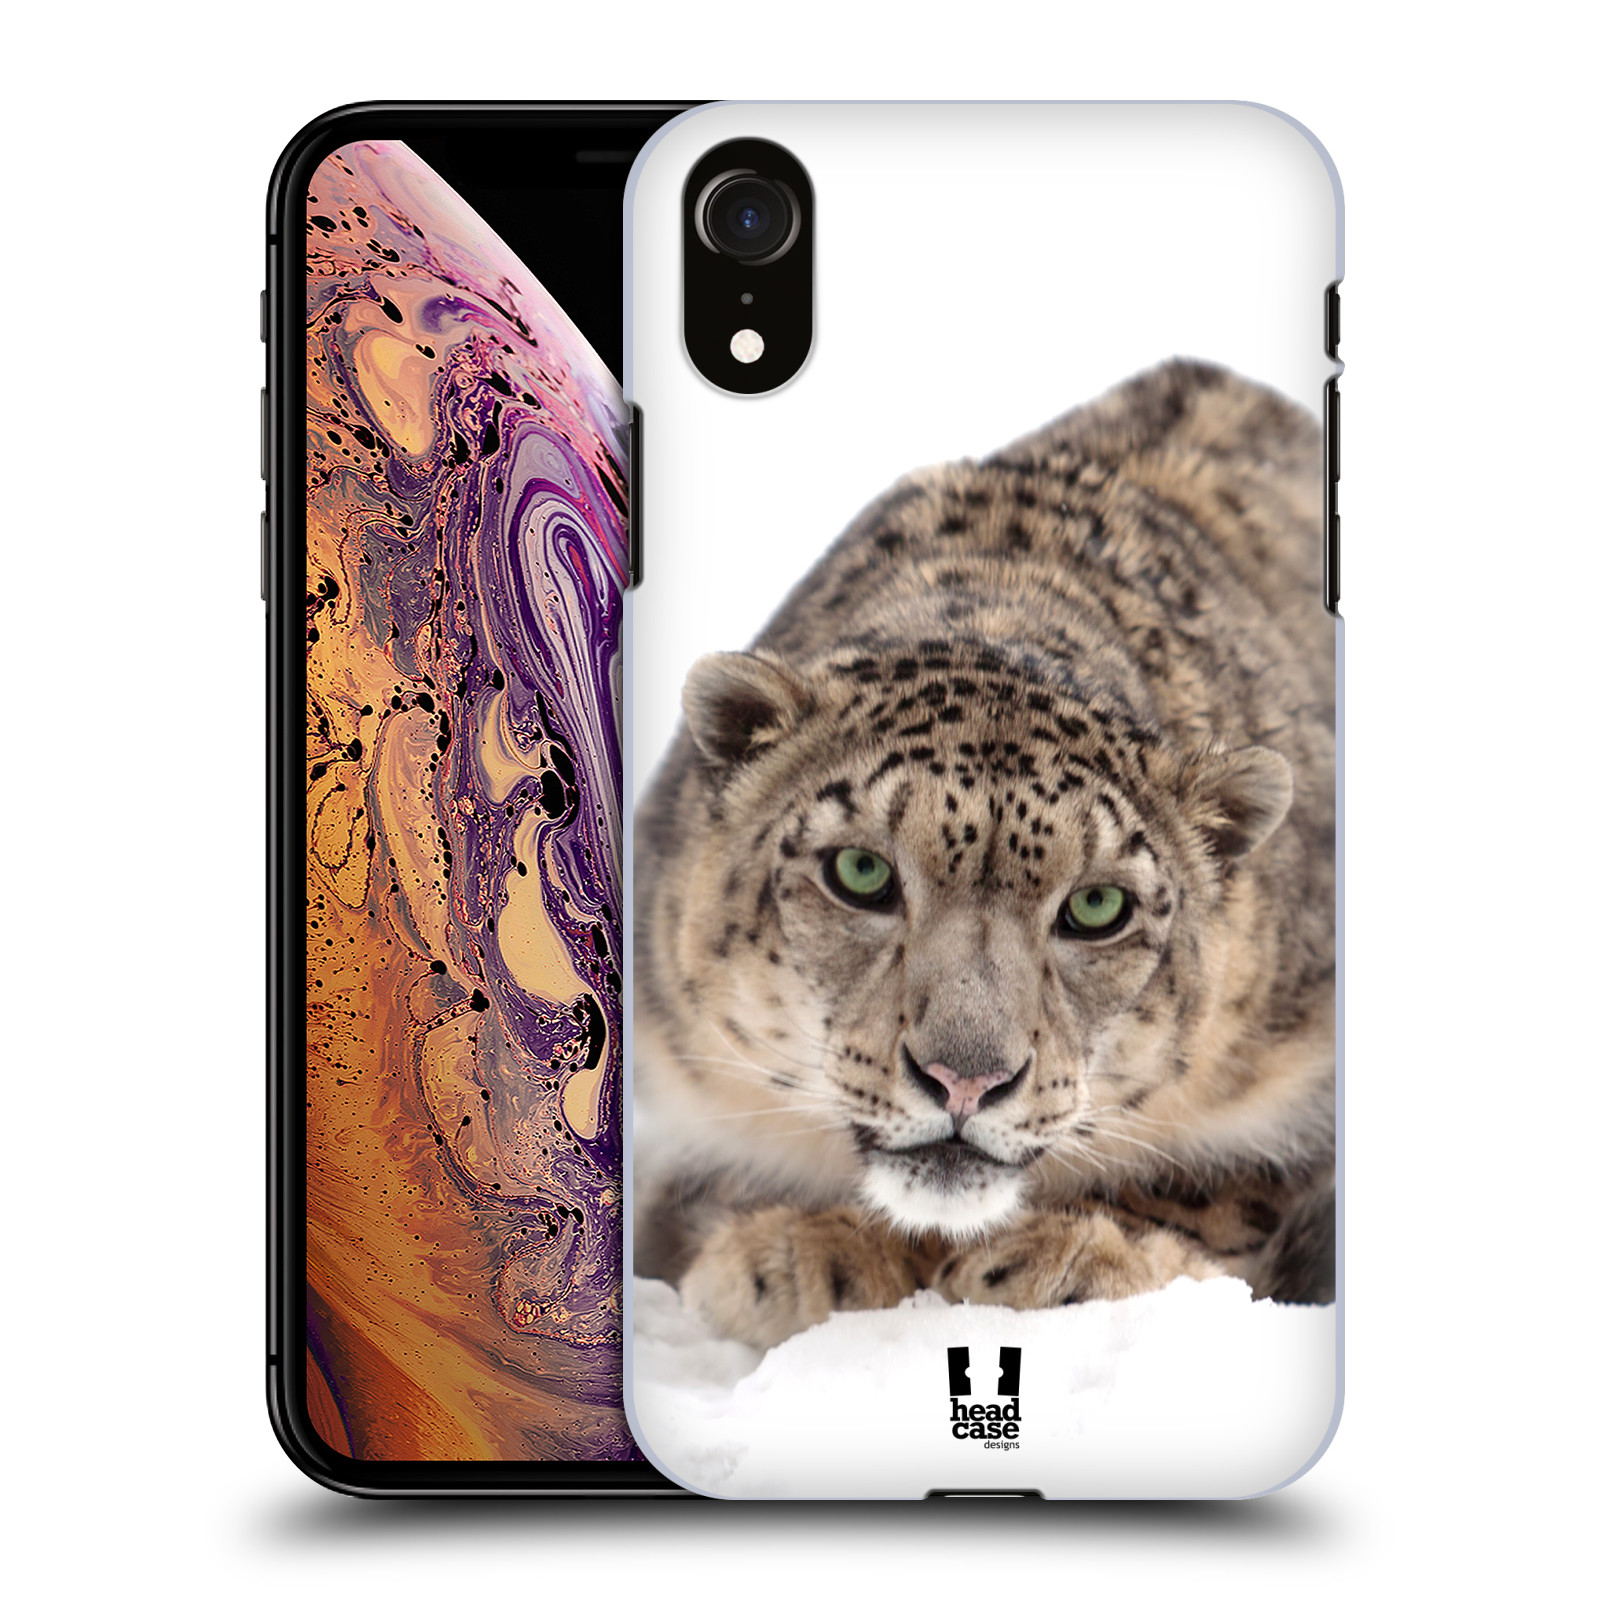 HEAD CASE plastový obal na mobil Apple Iphone XR vzor Divočina, Divoký život a zvířata foto SNĚŽNÝ LEOPARD